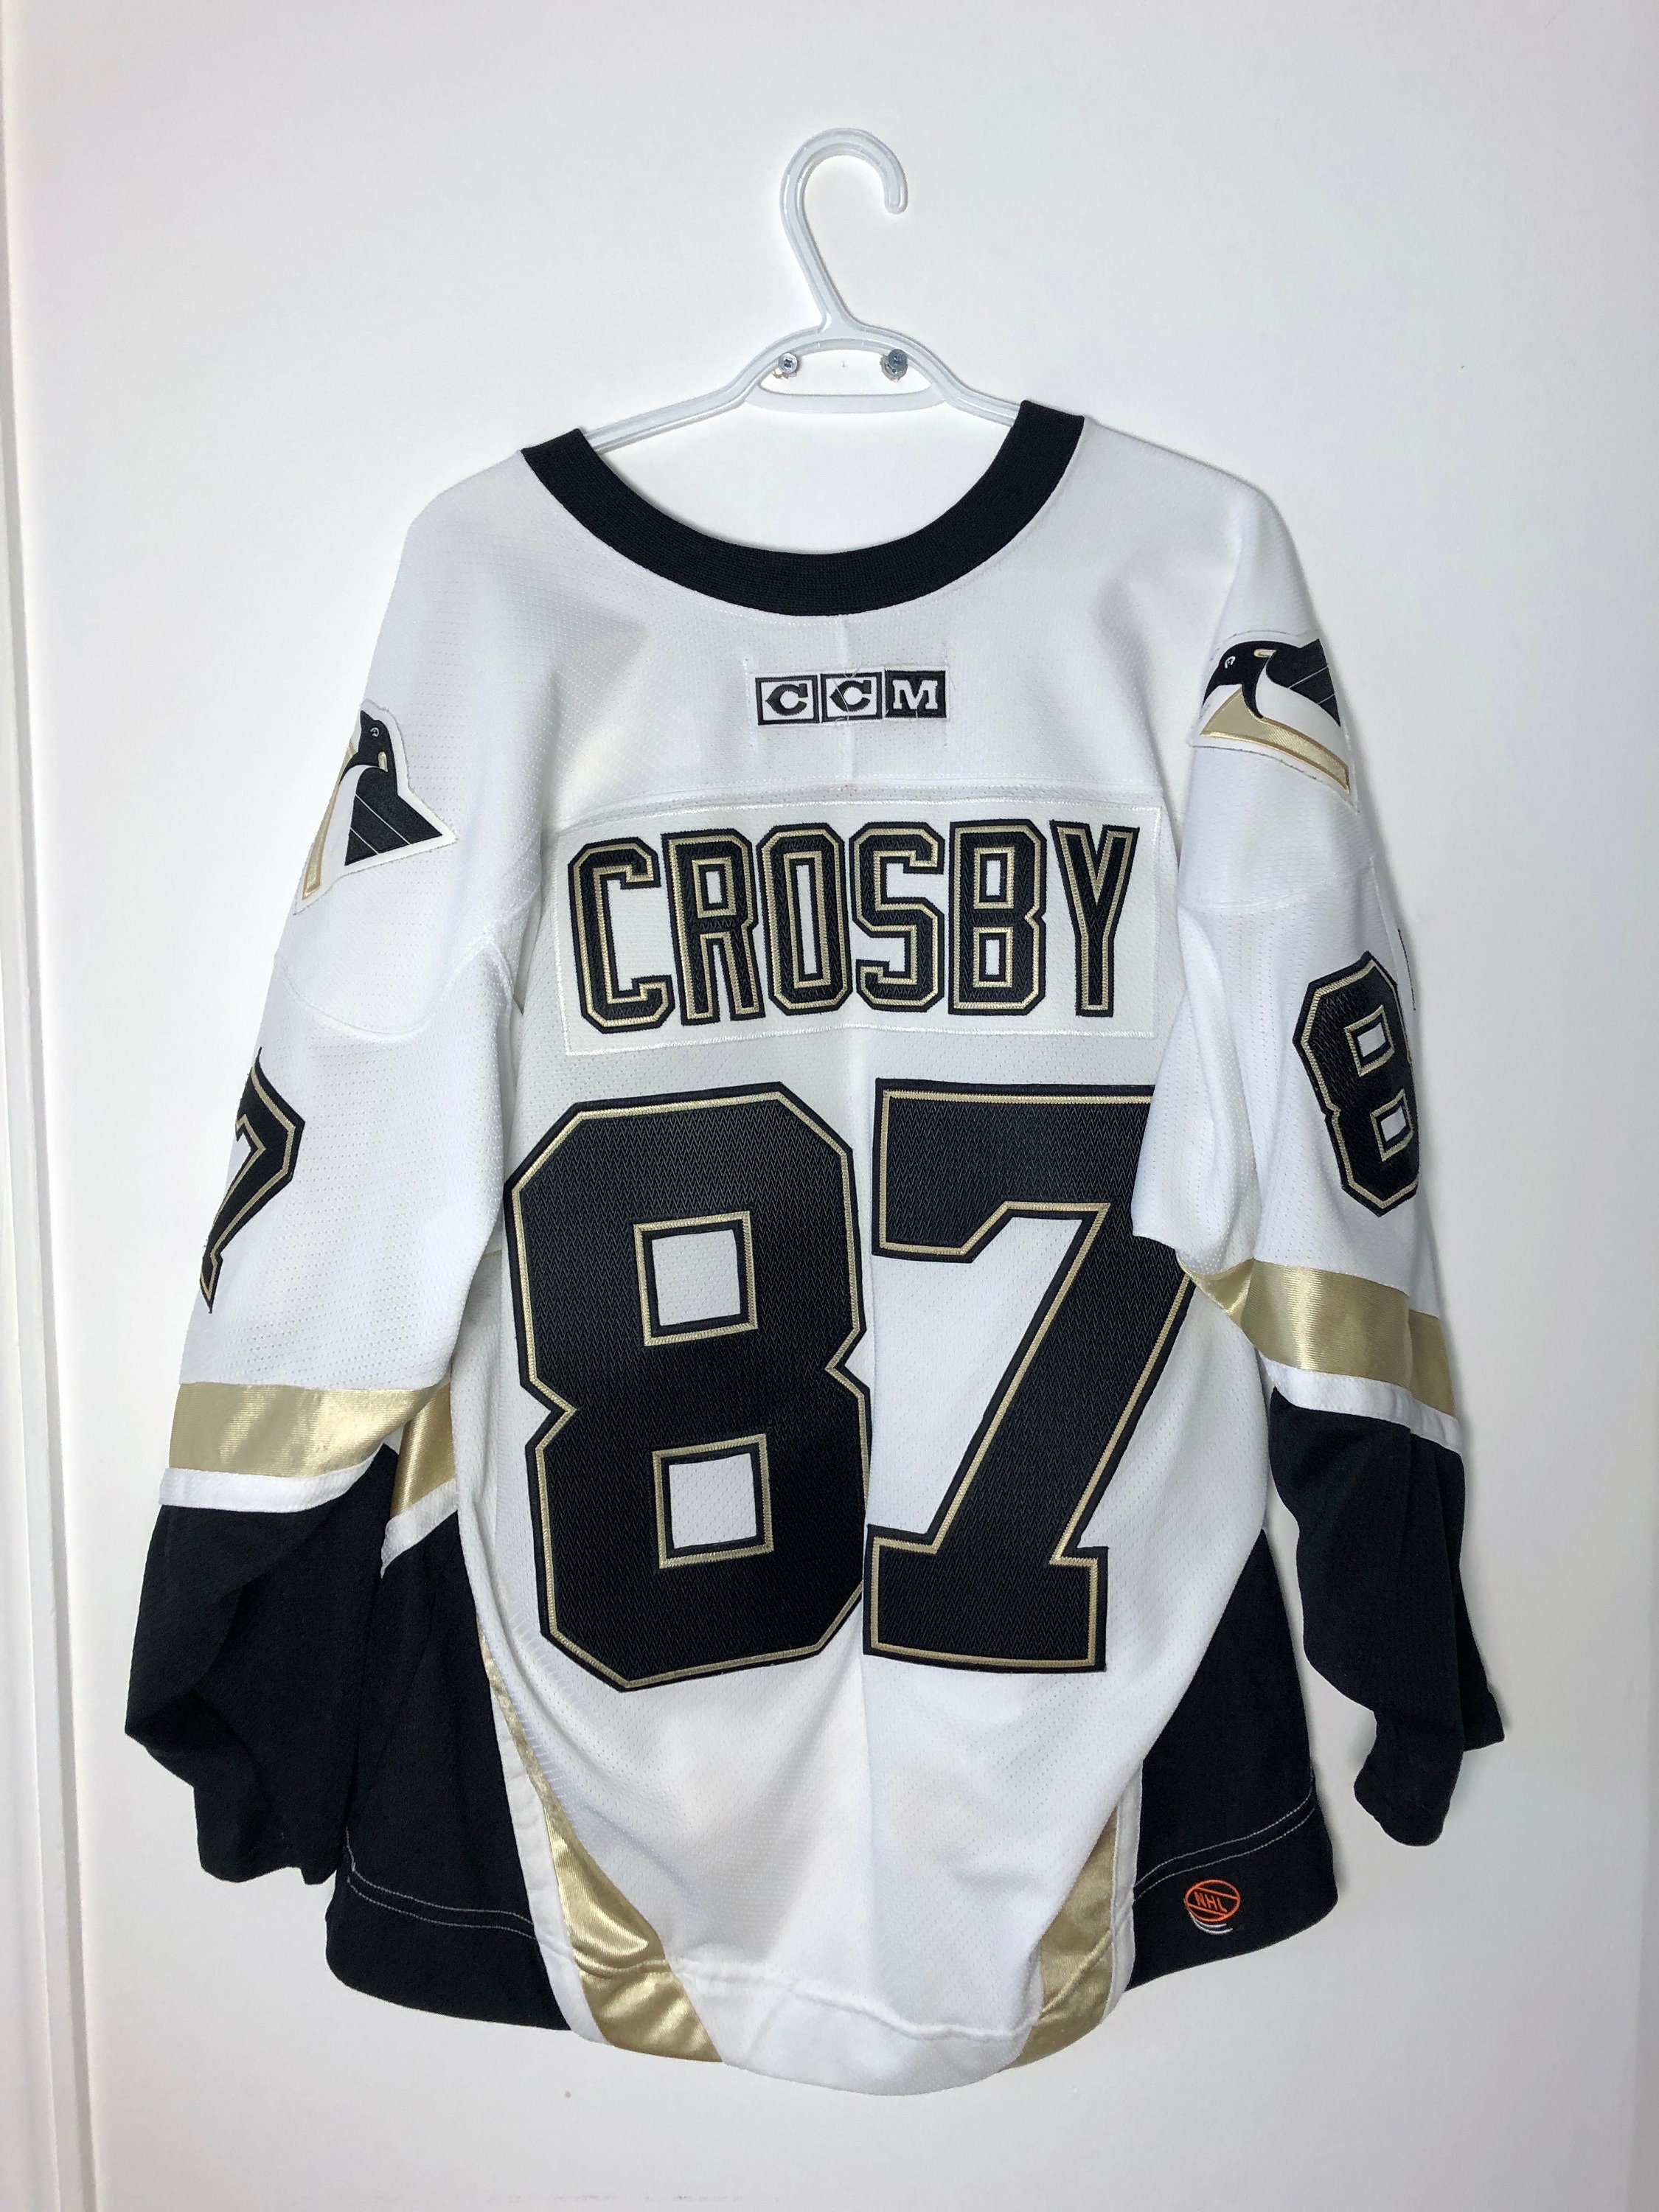 SIDNEY CROSBY Shirt Sidney Crosby Vintage Shirt Sidney Crosby Homage Shirt  Sidney Crosby Hockey Jersey Sidney Crosby Ice Hoc - AliExpress